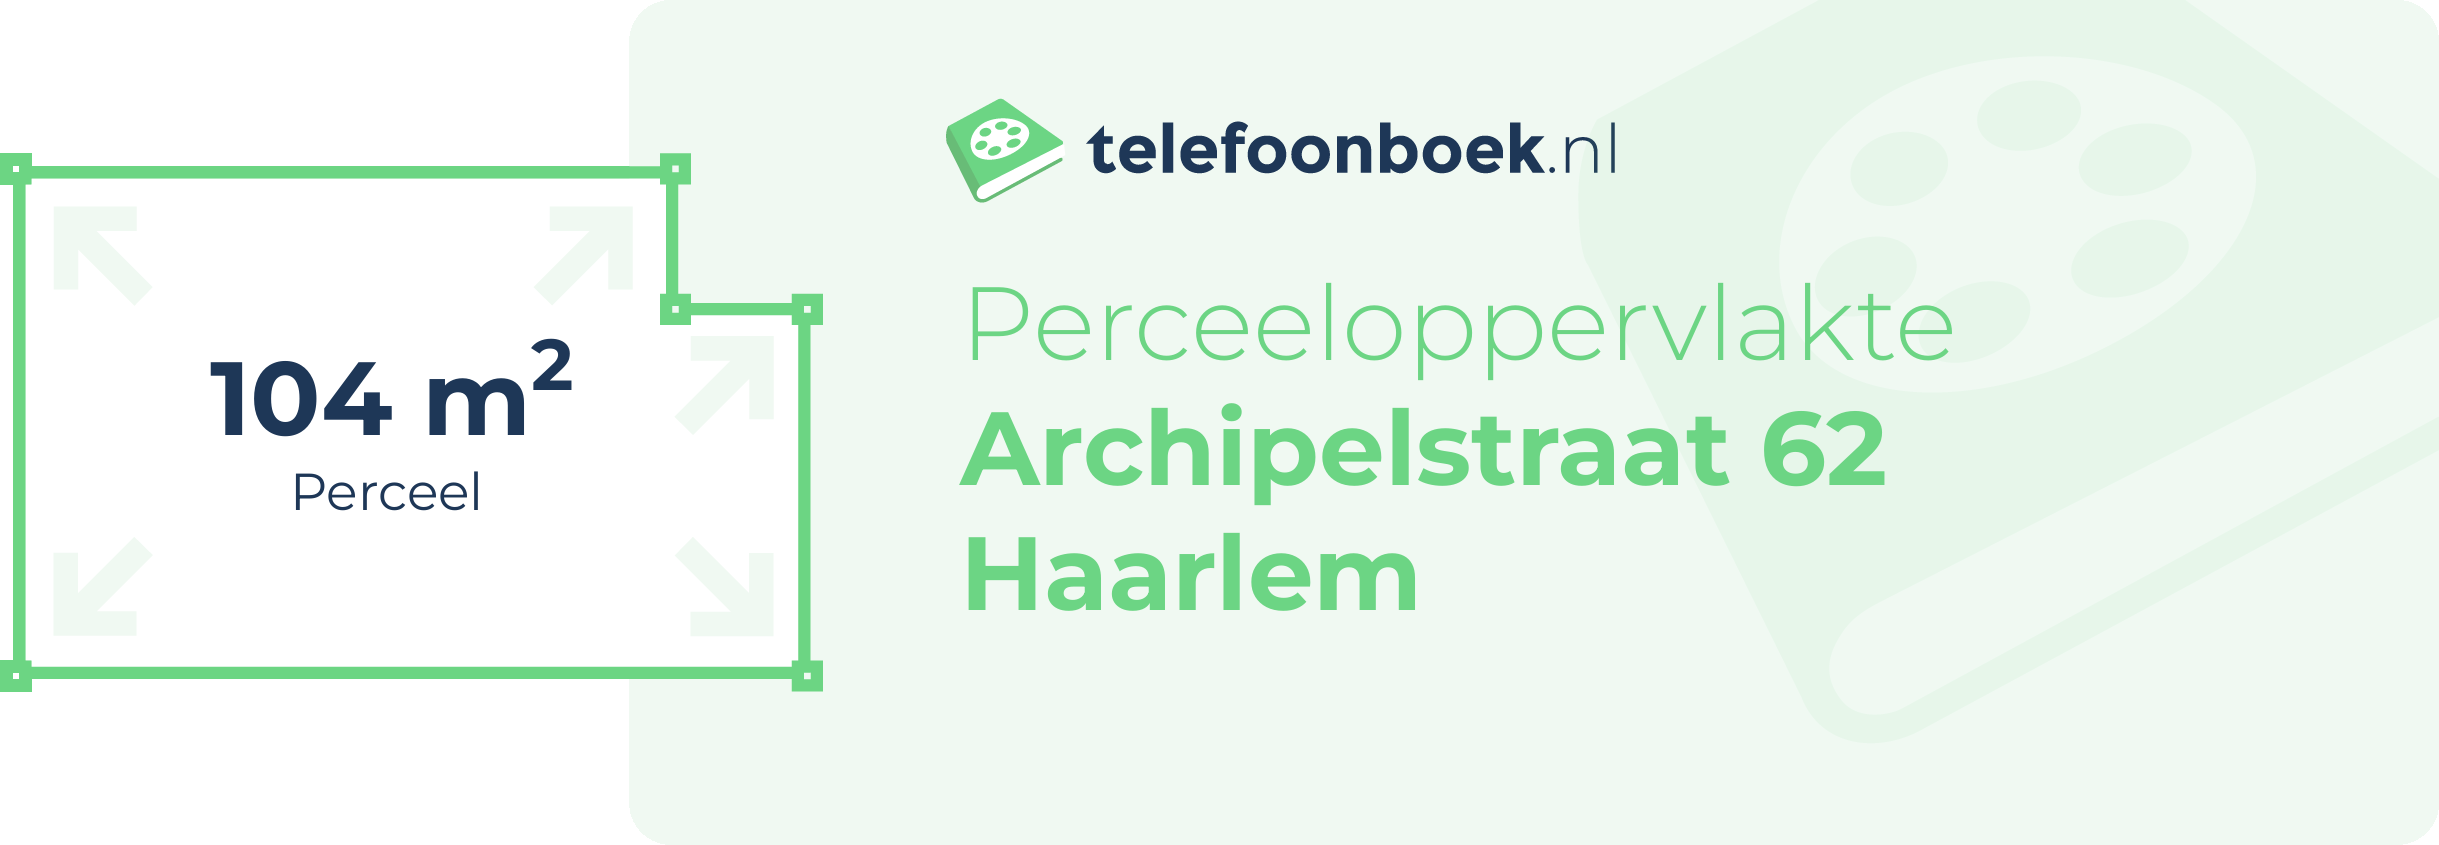 Perceeloppervlakte Archipelstraat 62 Haarlem